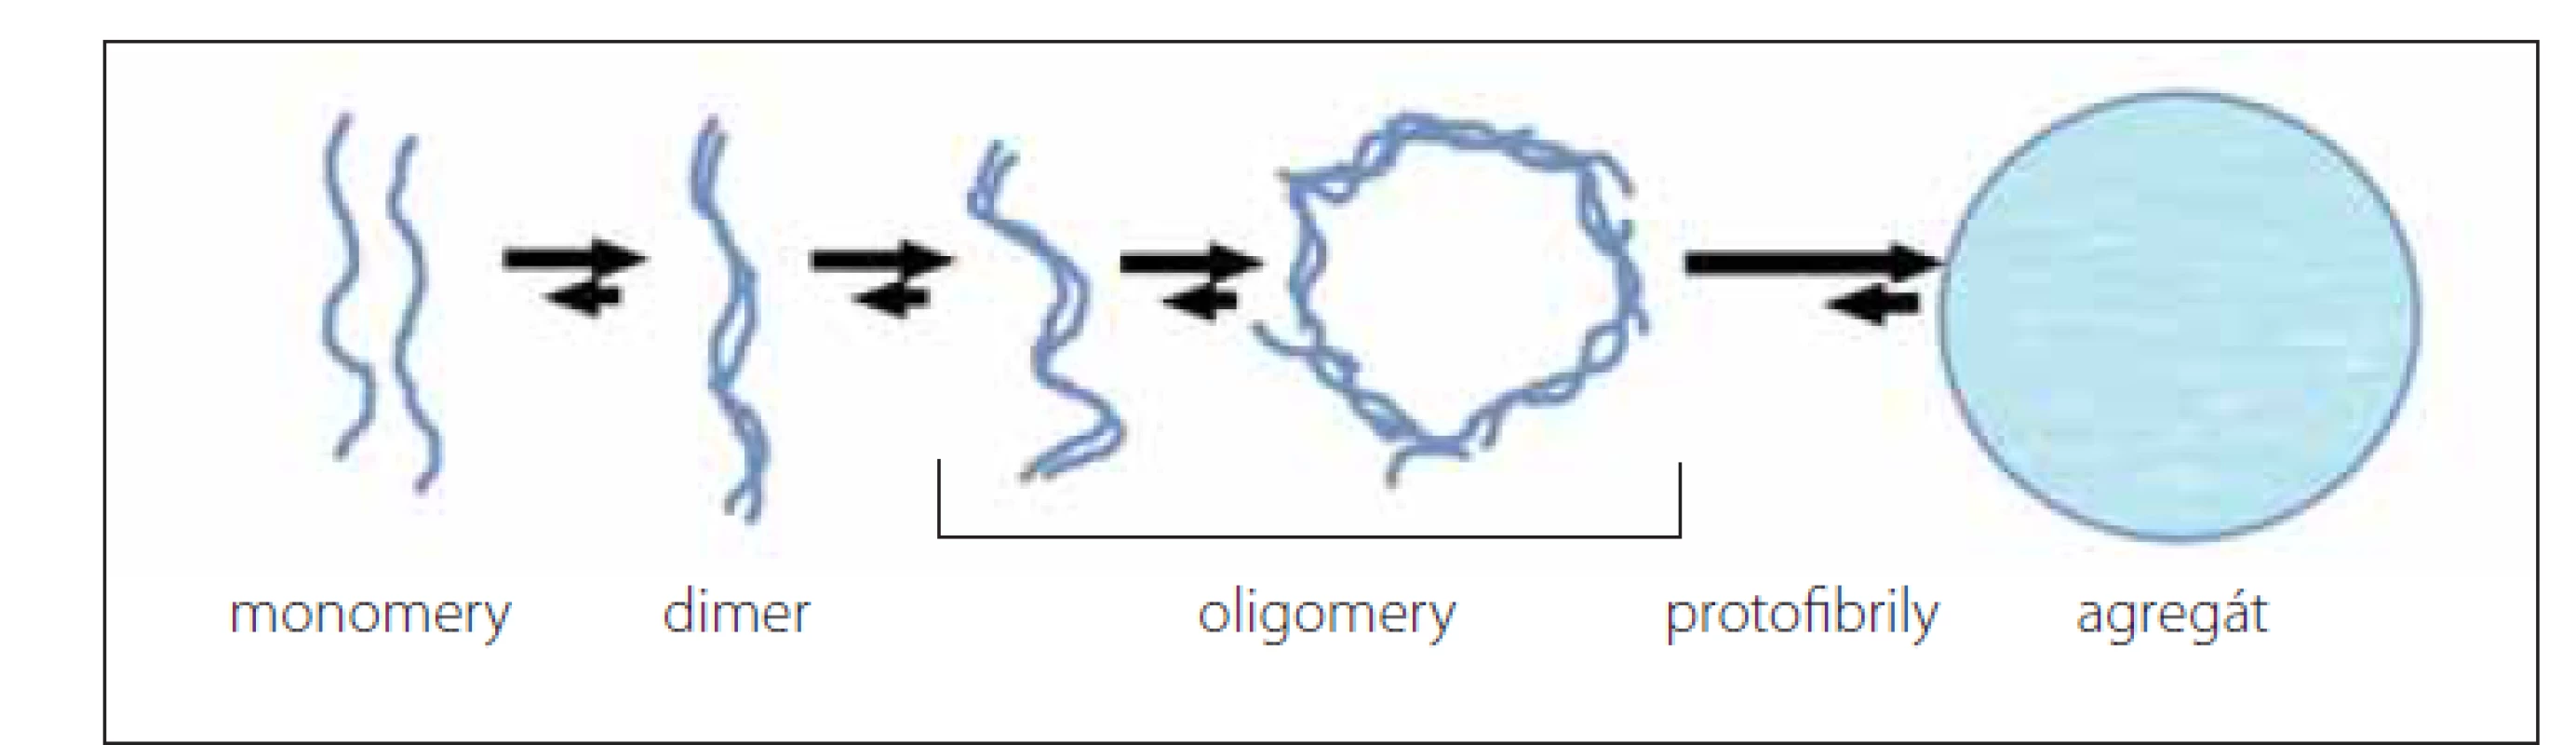 Schéma procesu agregace α-synukleinu – přeloženo z [5].<br>
Fig. 1. Scheme of the α-synuclein aggregation process – translated from [5].